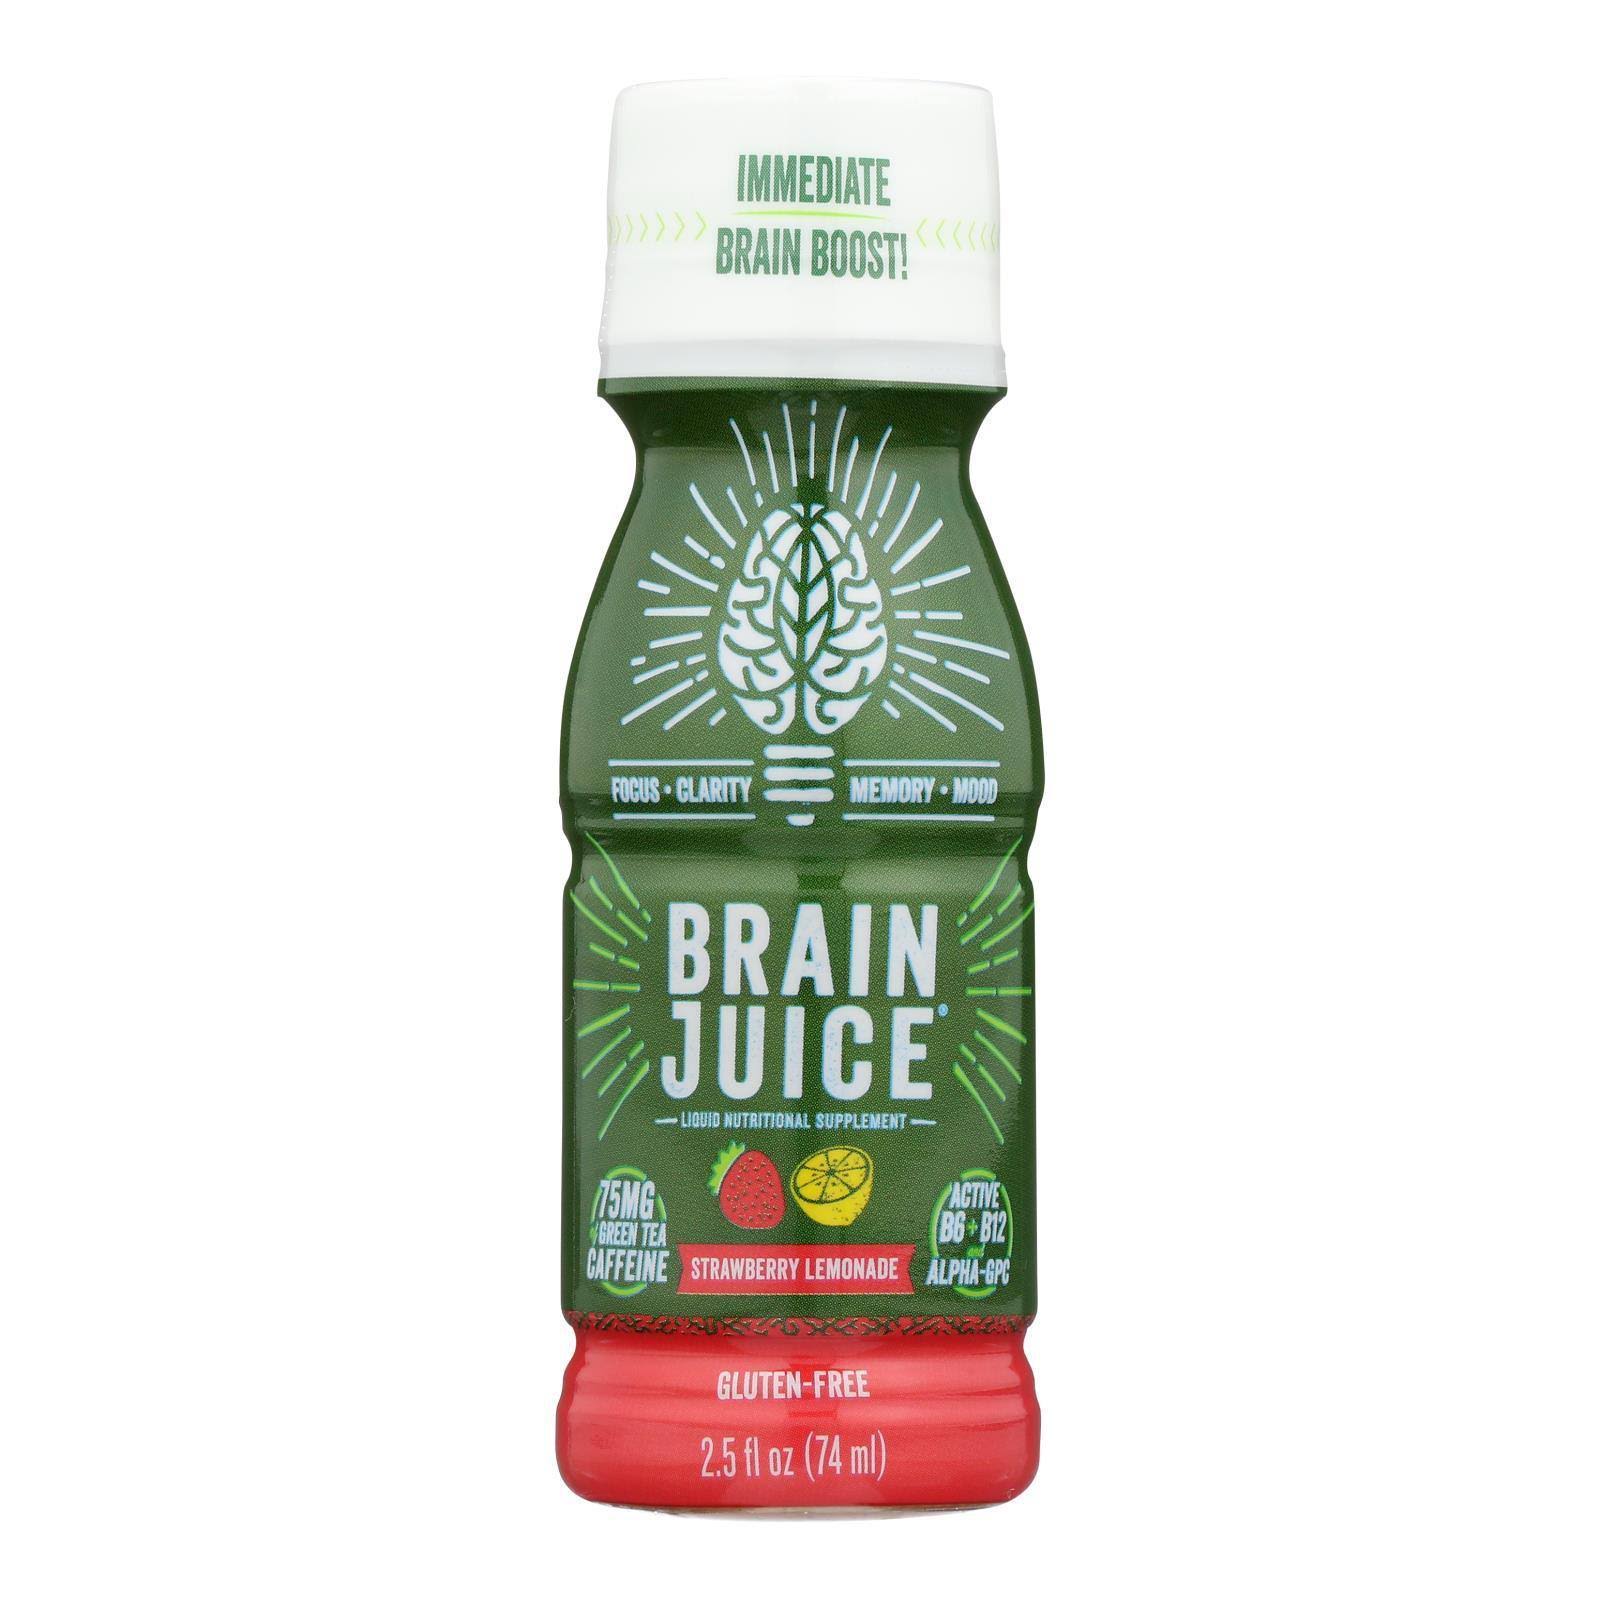 Brain Juice Liquid Nutritional Supplement - Strawberry Lemonade, 74ml